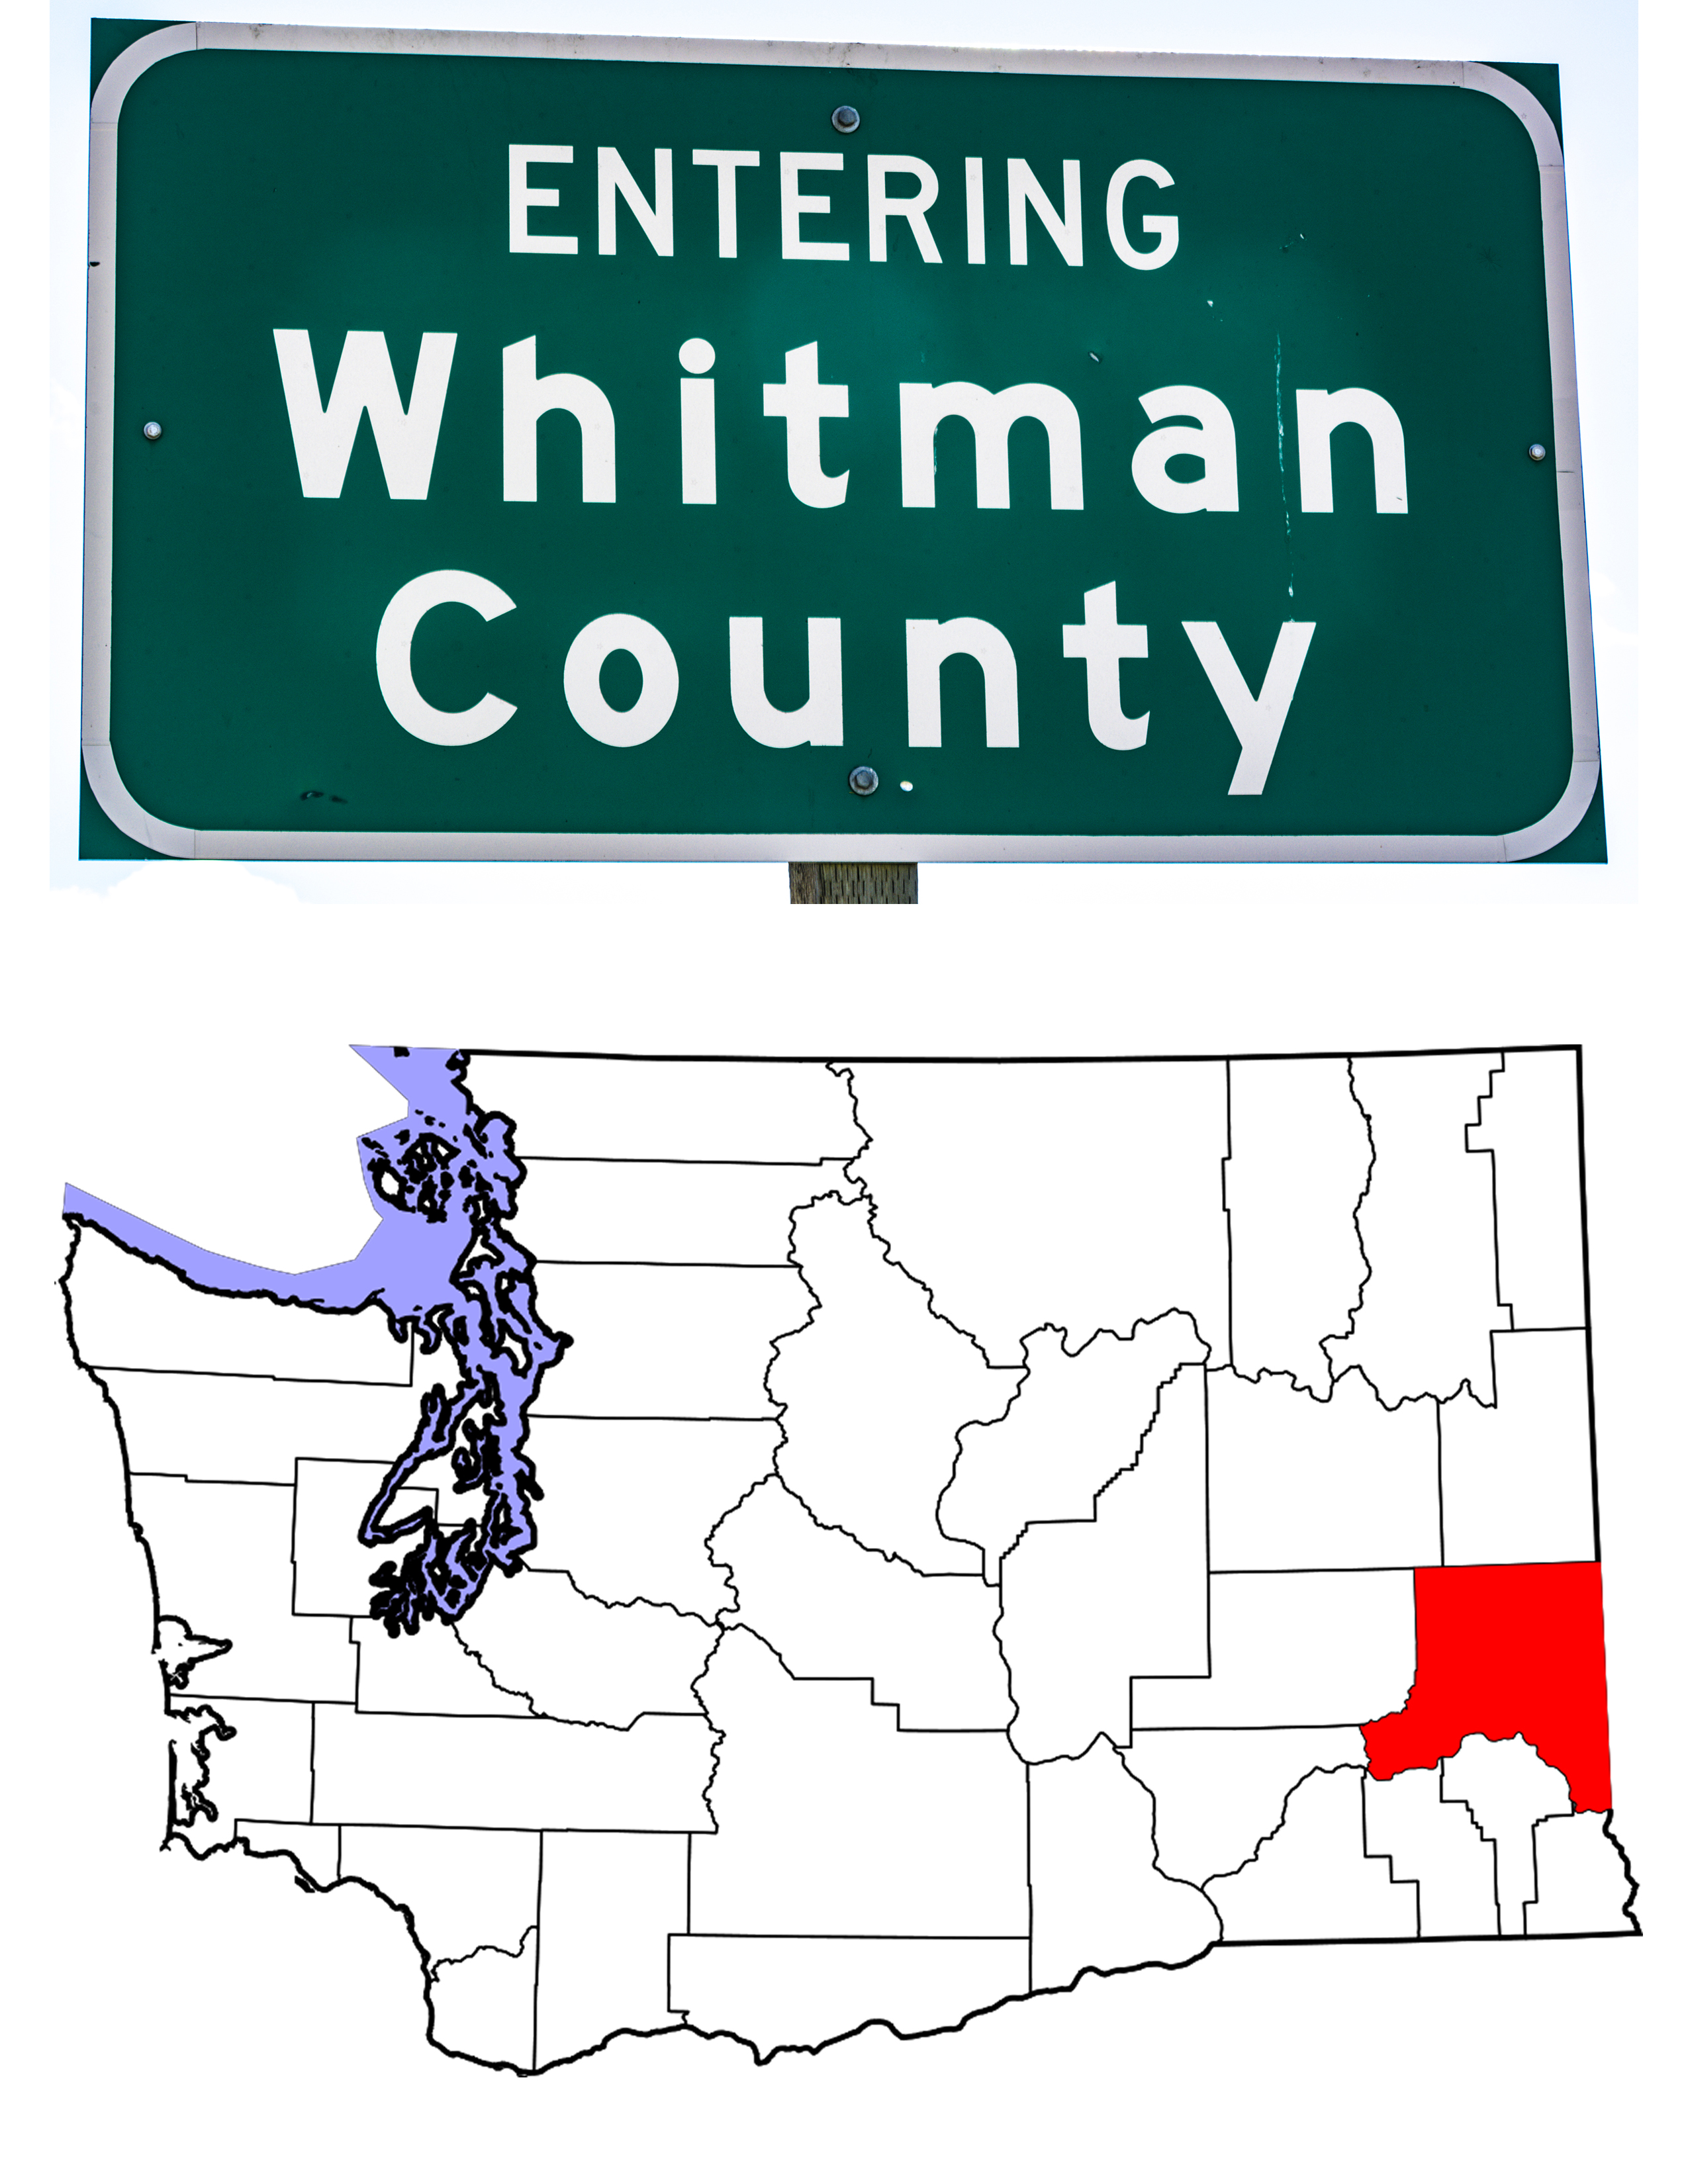 Whitman County